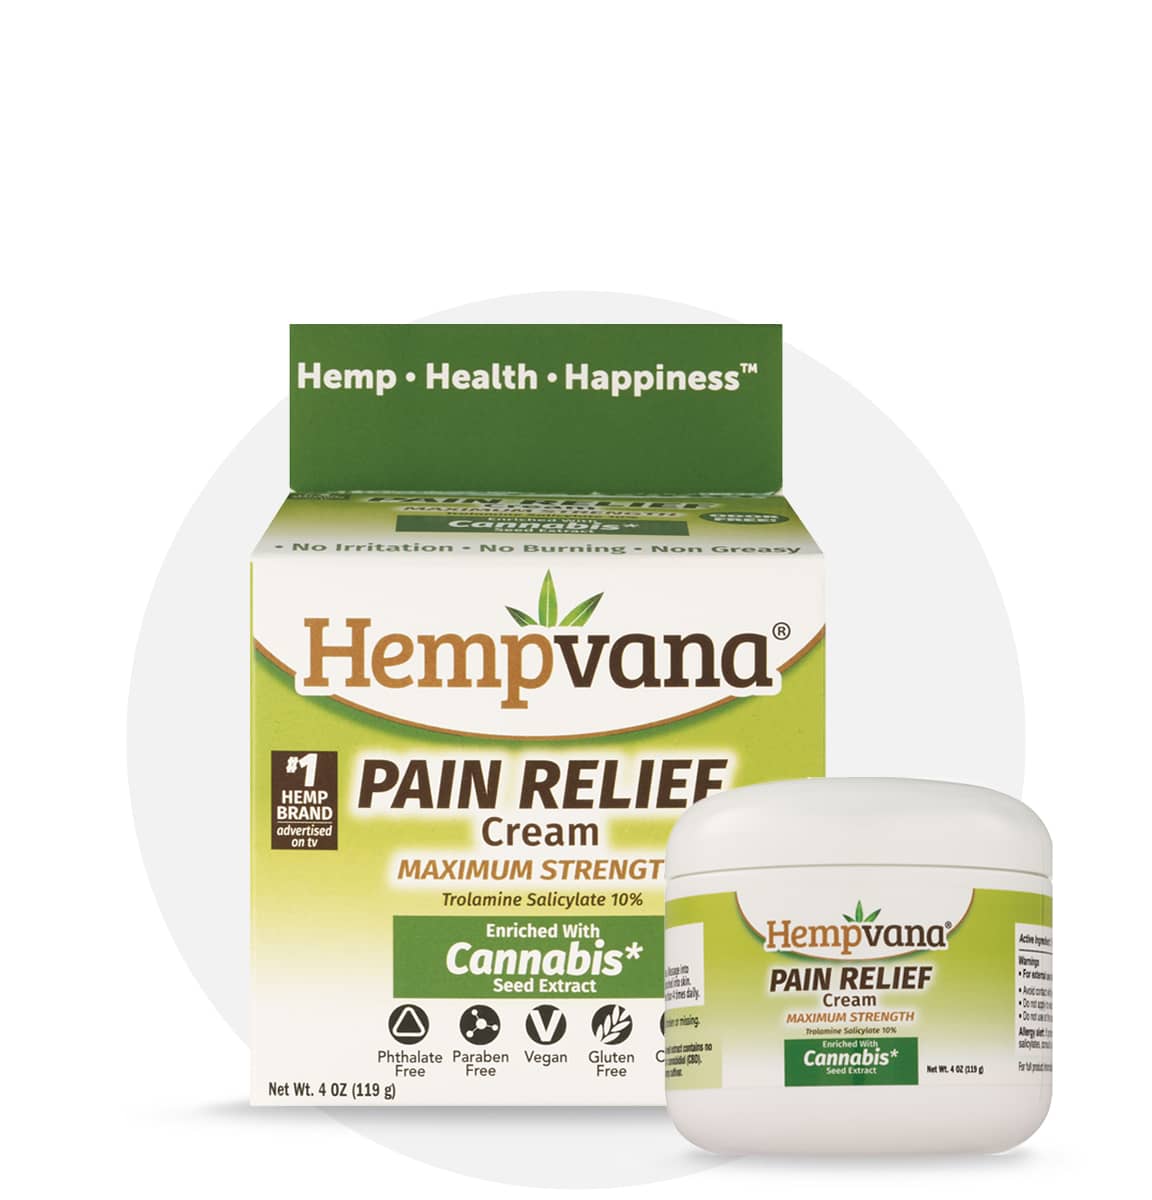 Shop now for Hempvana® Pain Relief Cream, Maximum Strength